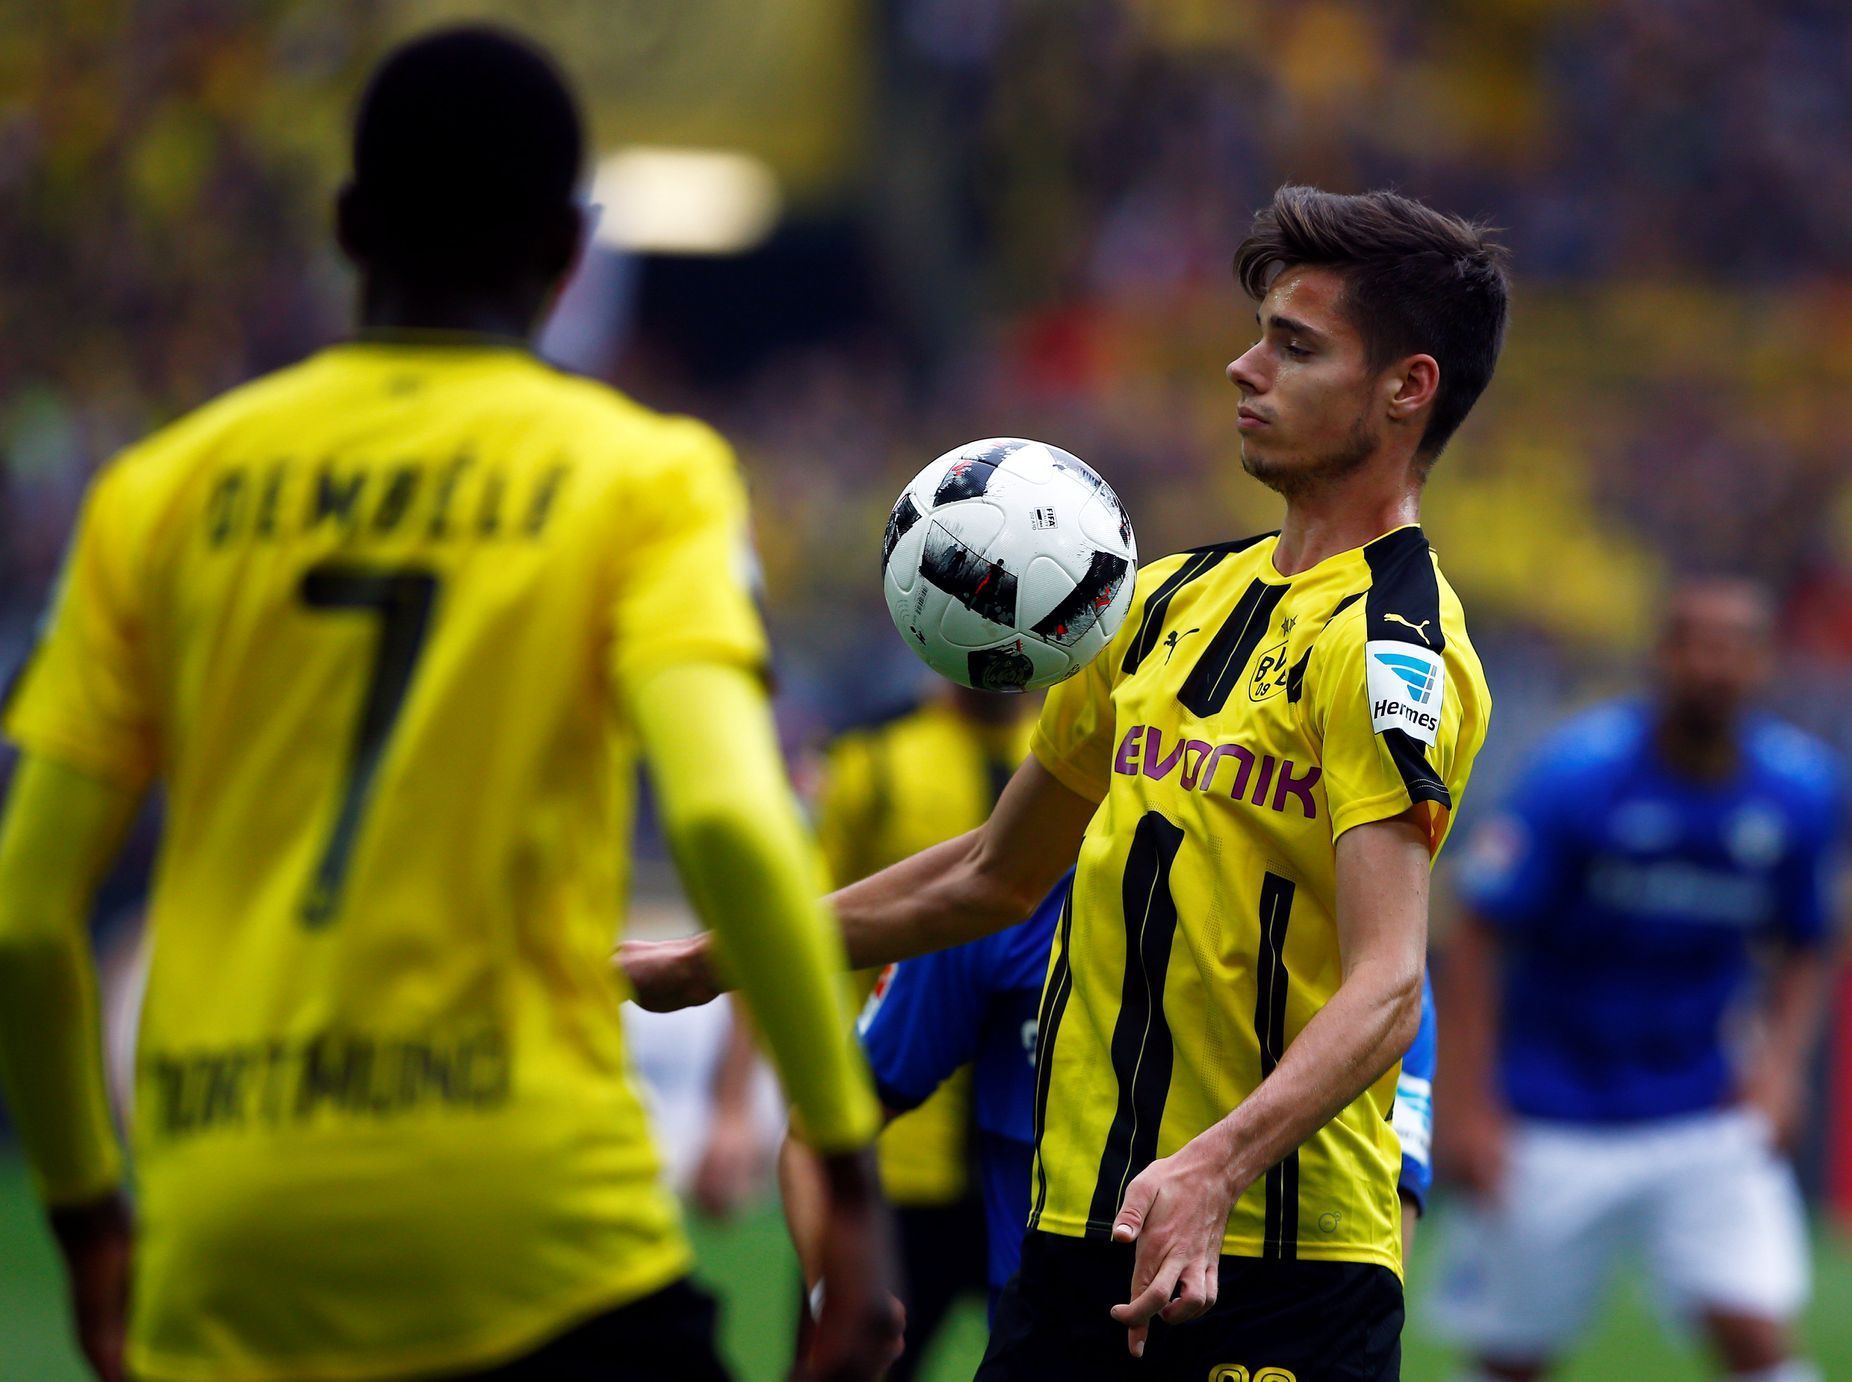 Julian Weigl (Borussia Dortmund)